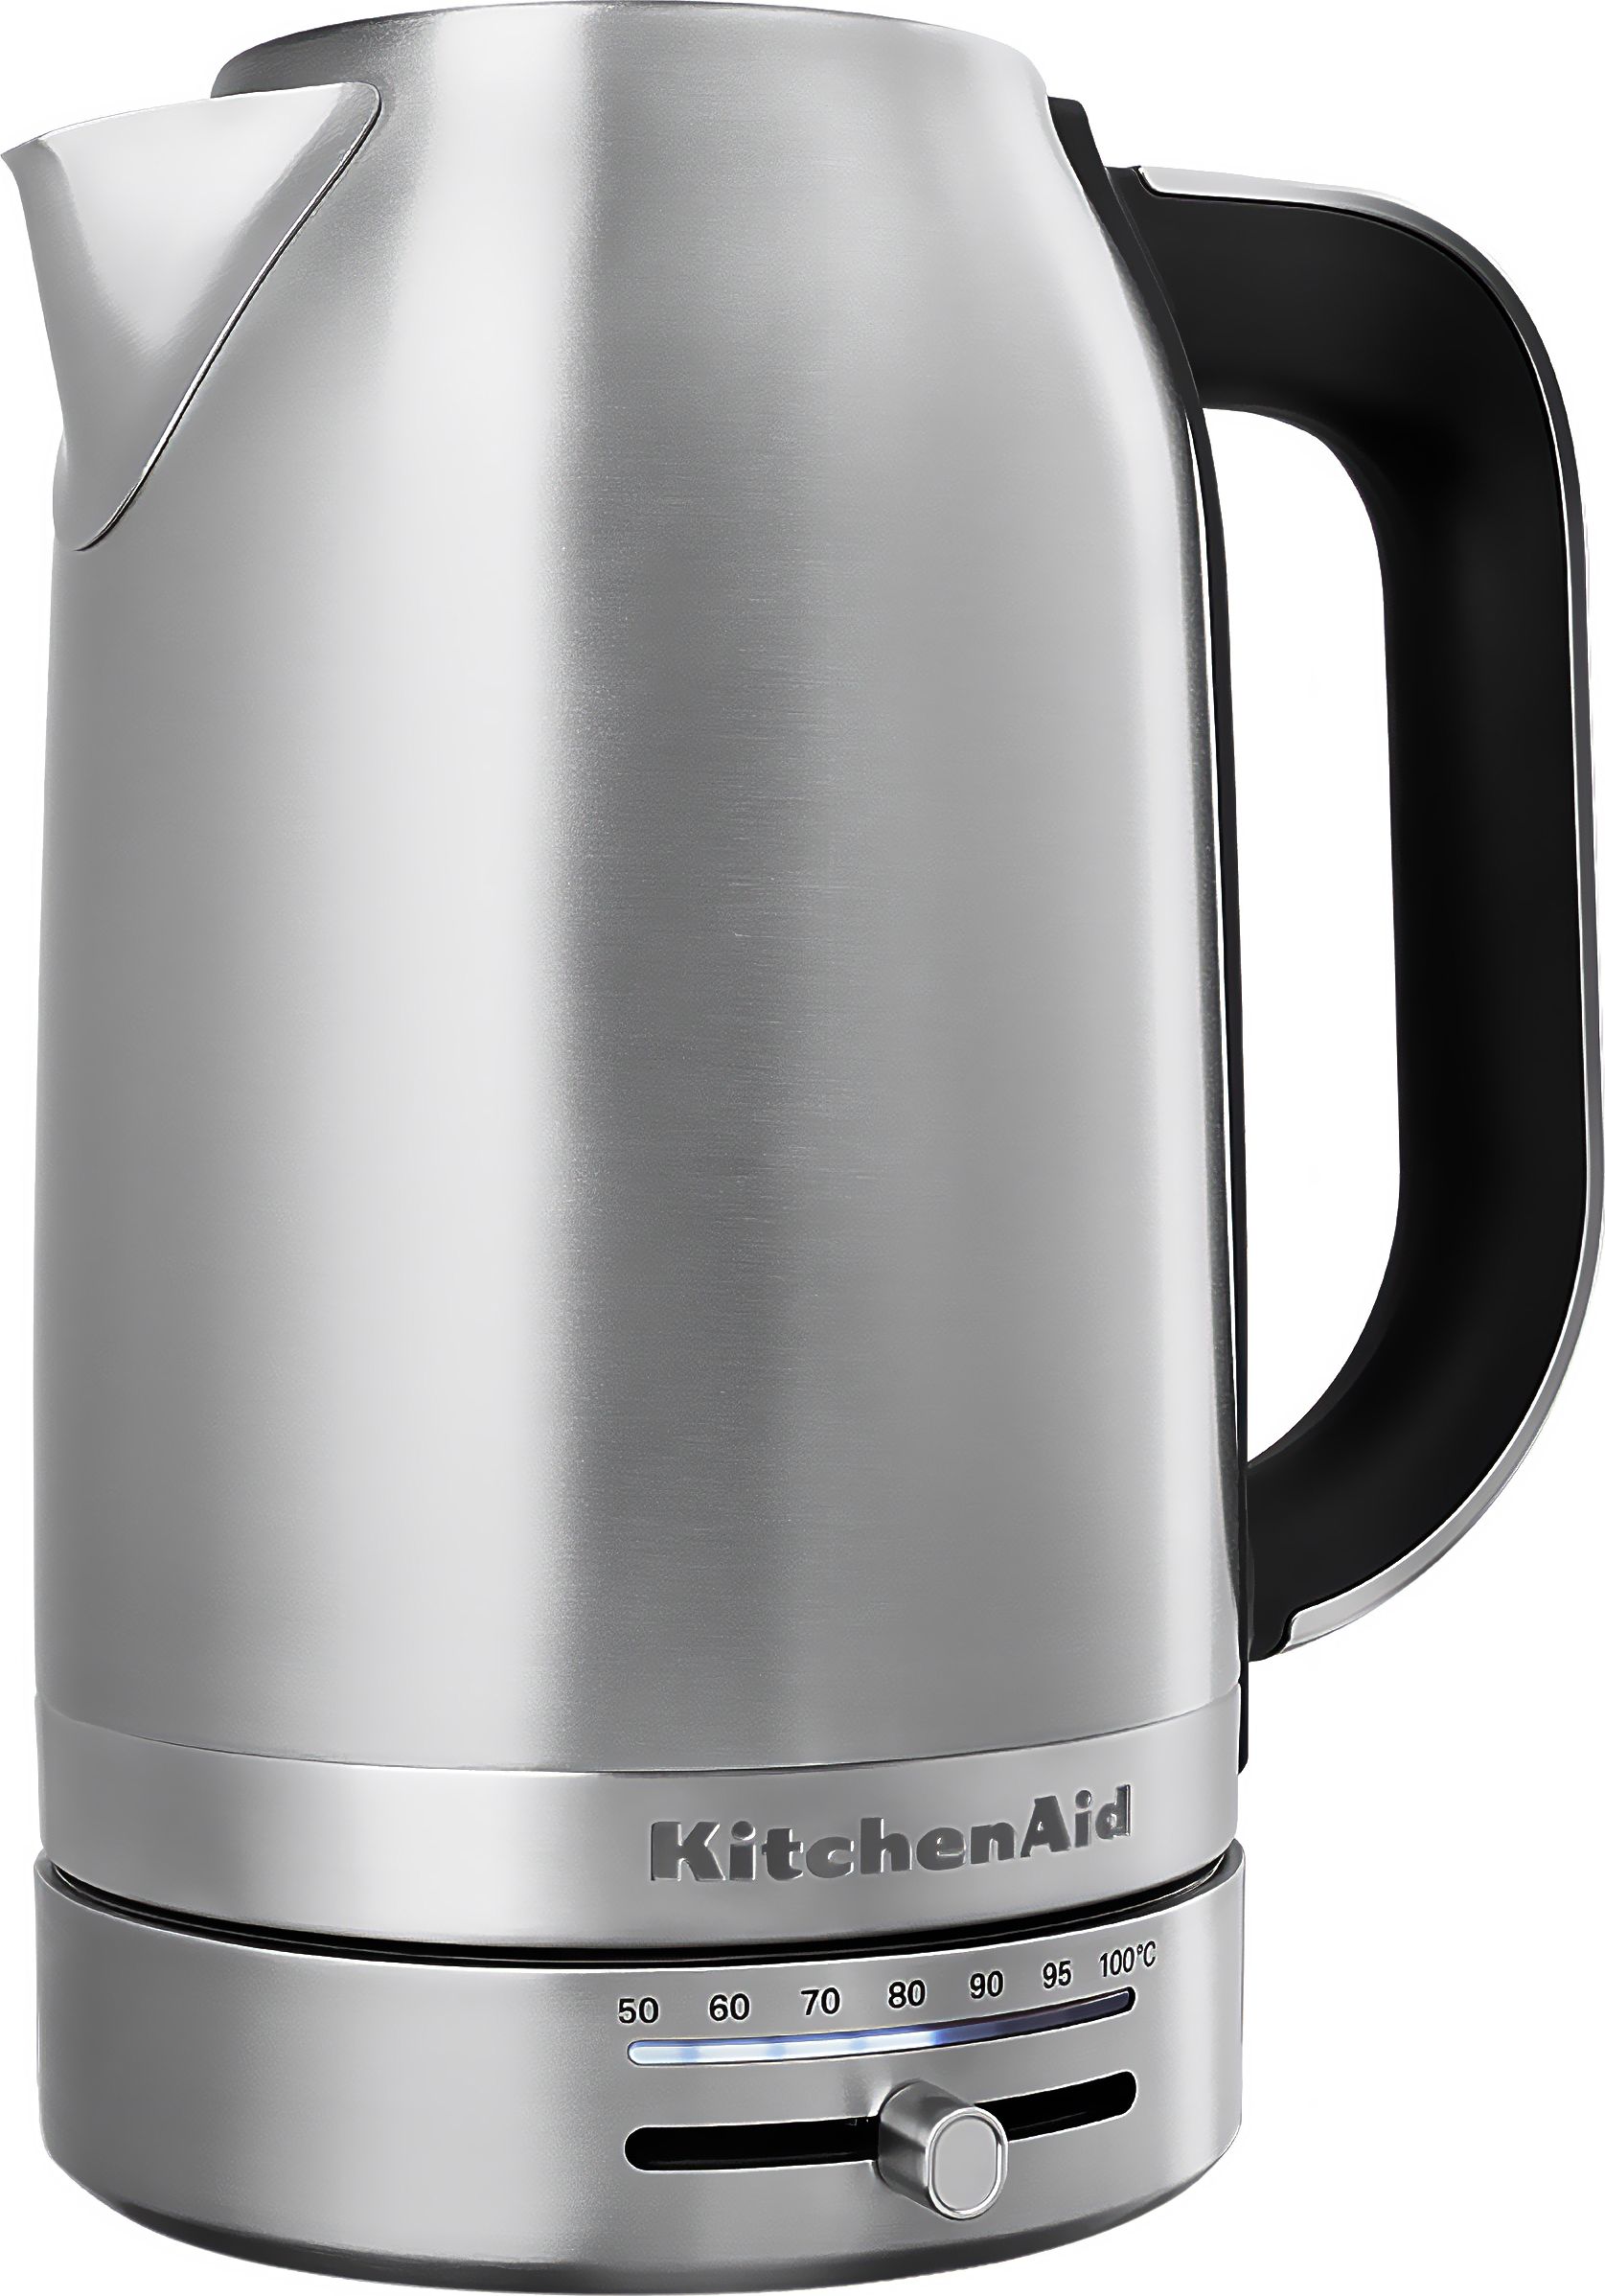 KitchenAid 5KEK1701BSX Kettle - Stainless Steel, Stainless Steel